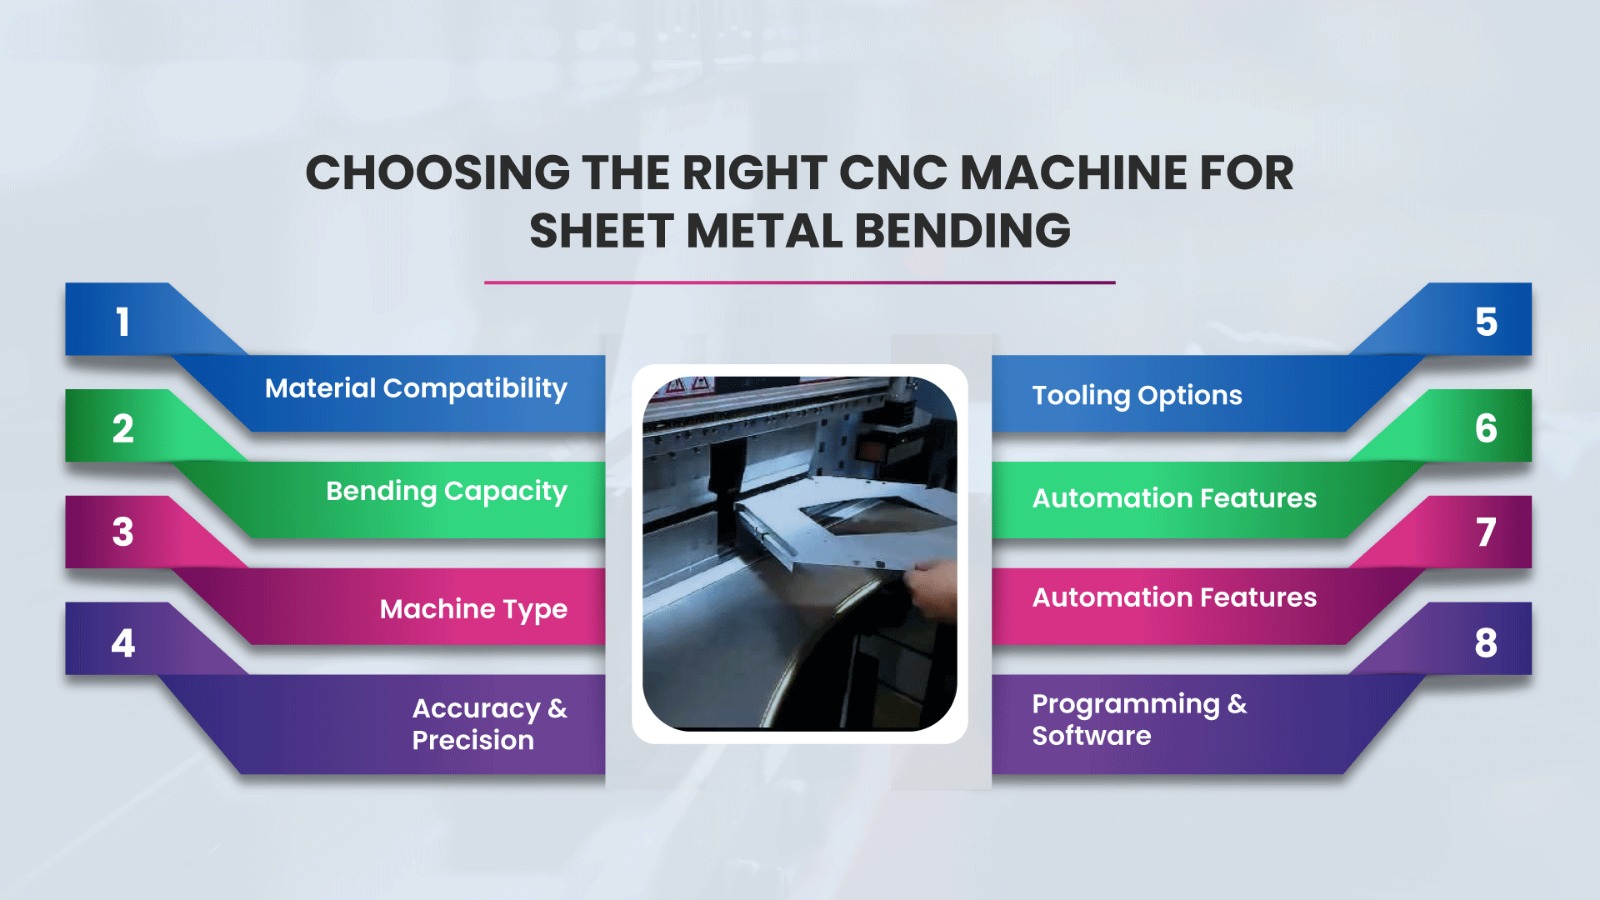 CHOOSING THE RIGHT CNC MACHINE FOR SHEET METAL BENDING